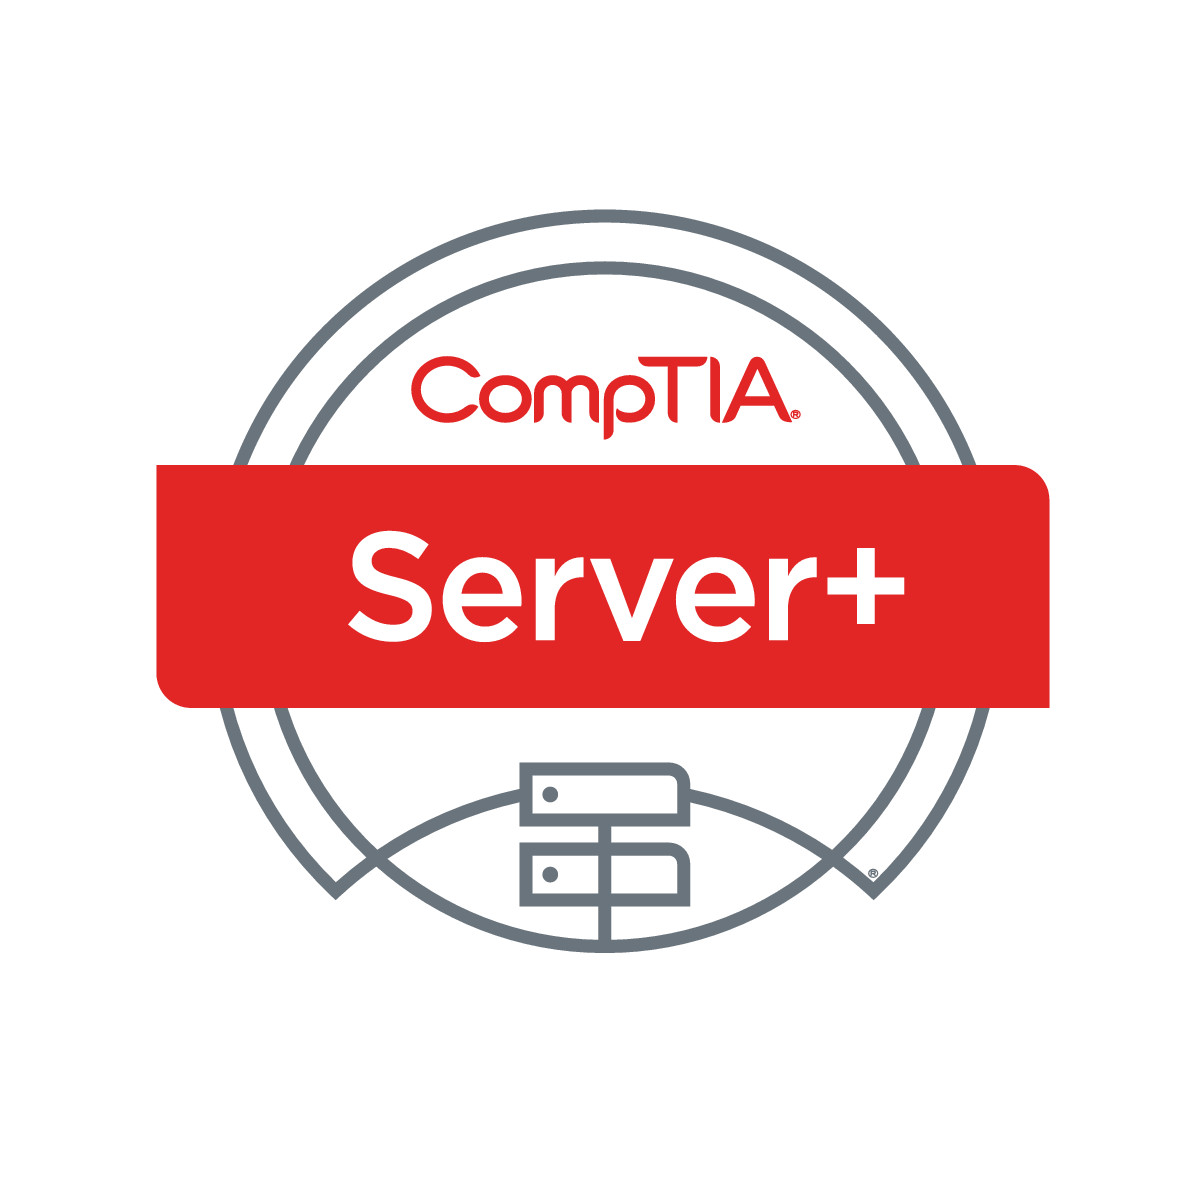 CompTIA Server+ (SK0-005) – Updated 2021